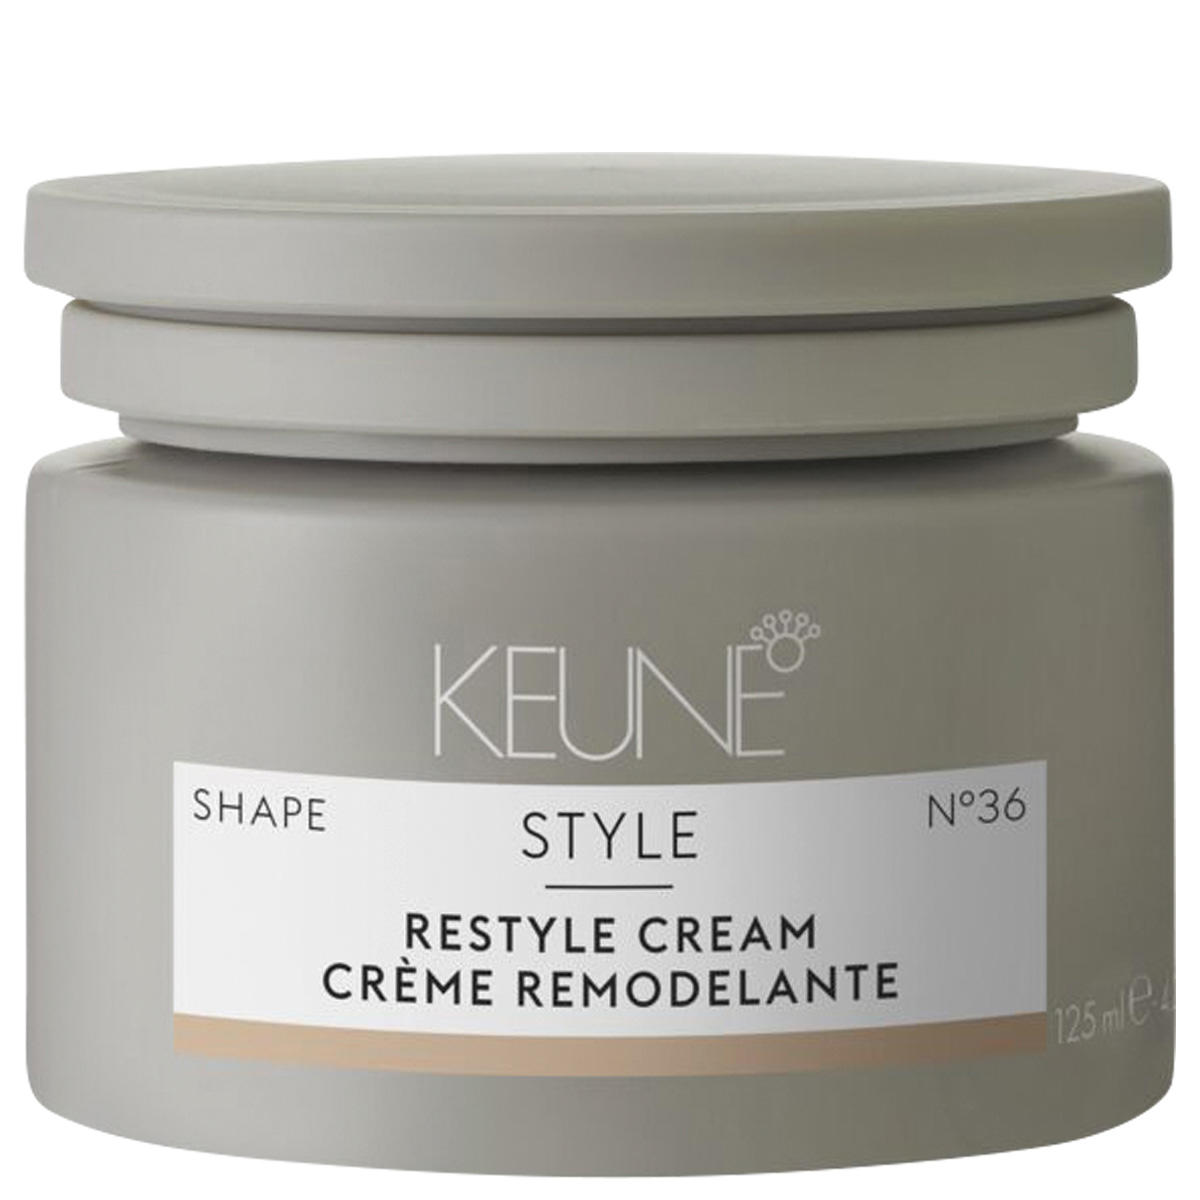 KEUNE STYLE Shape Restyle Cream leichter Halt 125 ml - 1